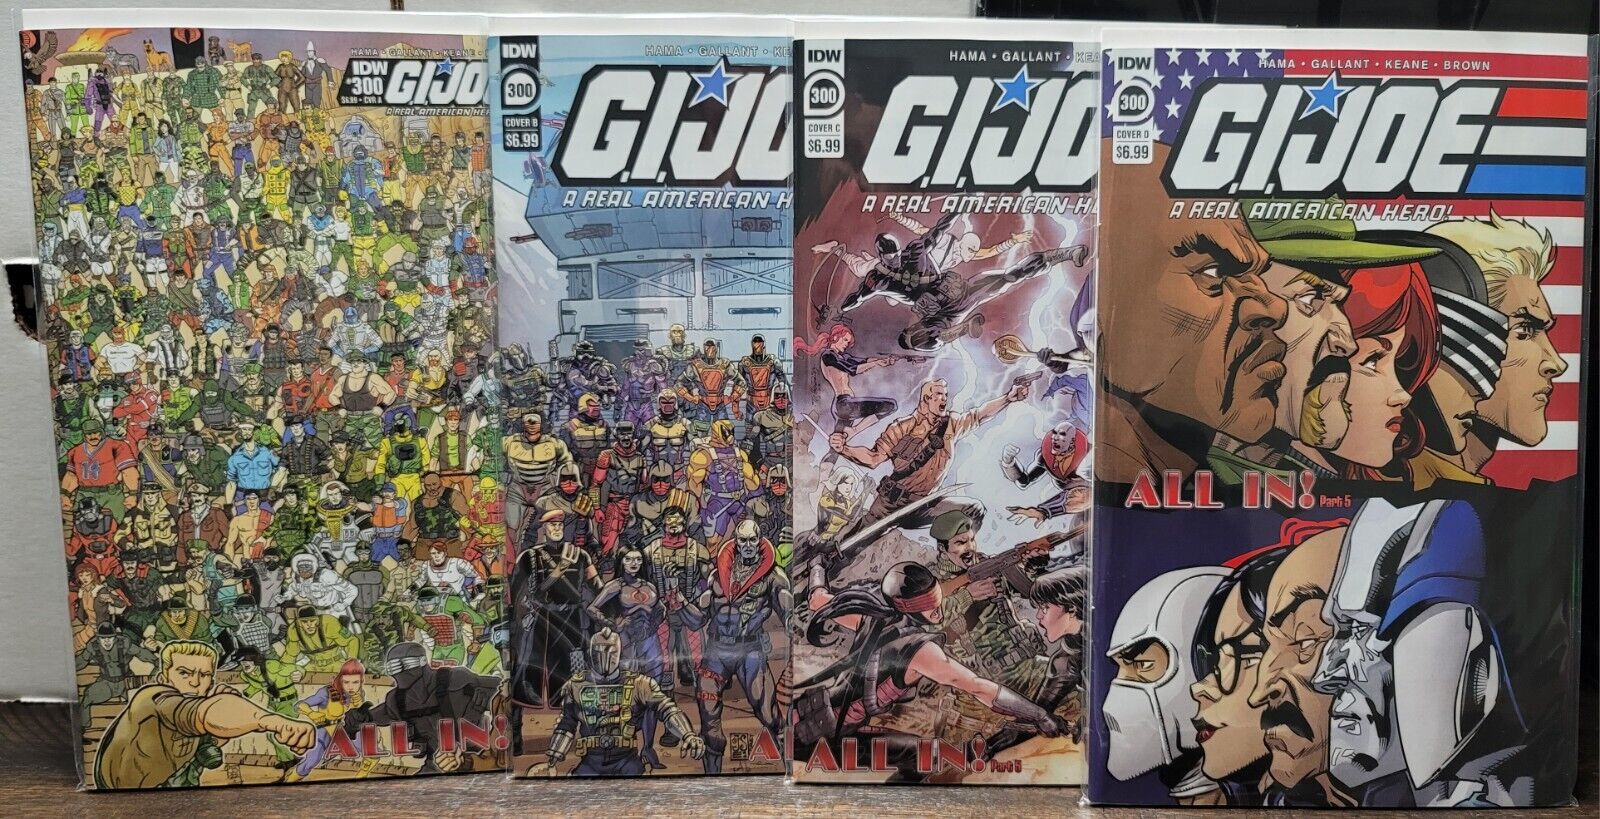 GI Joe A Real American Hero #300 4 Covers, A, B, C, & D All 4 Main Covers